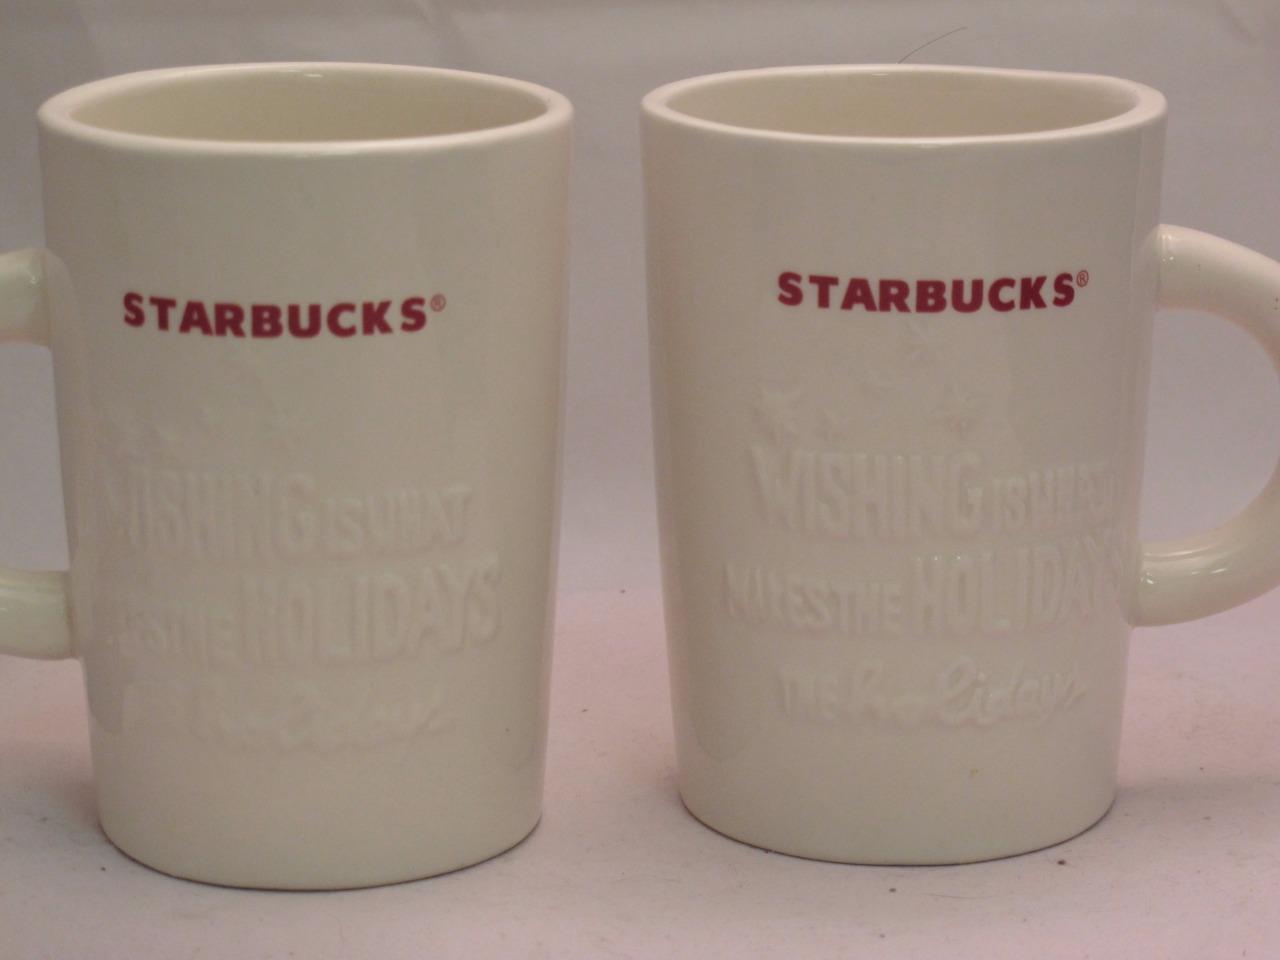 Starbucks 2010 Coffee Mug Wishing is what makes the holidays Set of Two